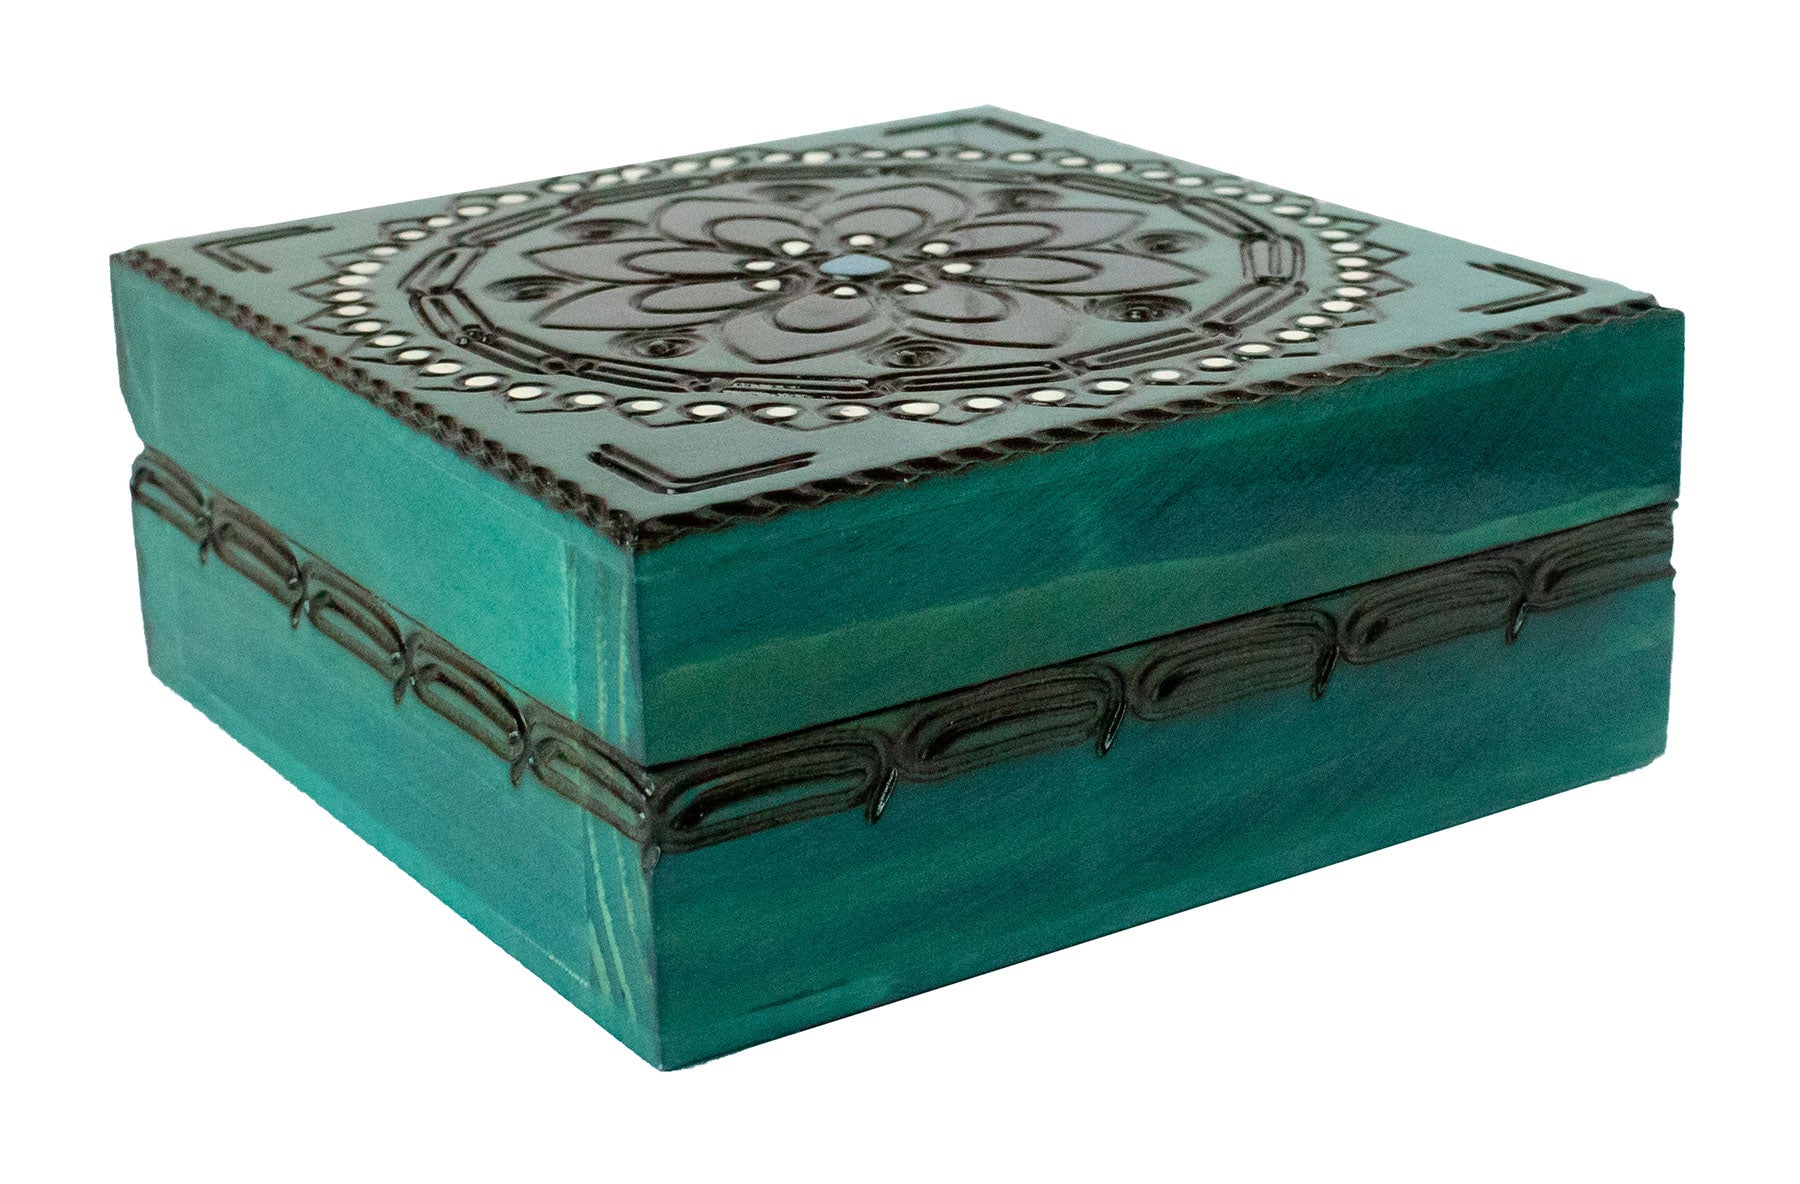 Wooden Box - Floral Design, Square 4x4